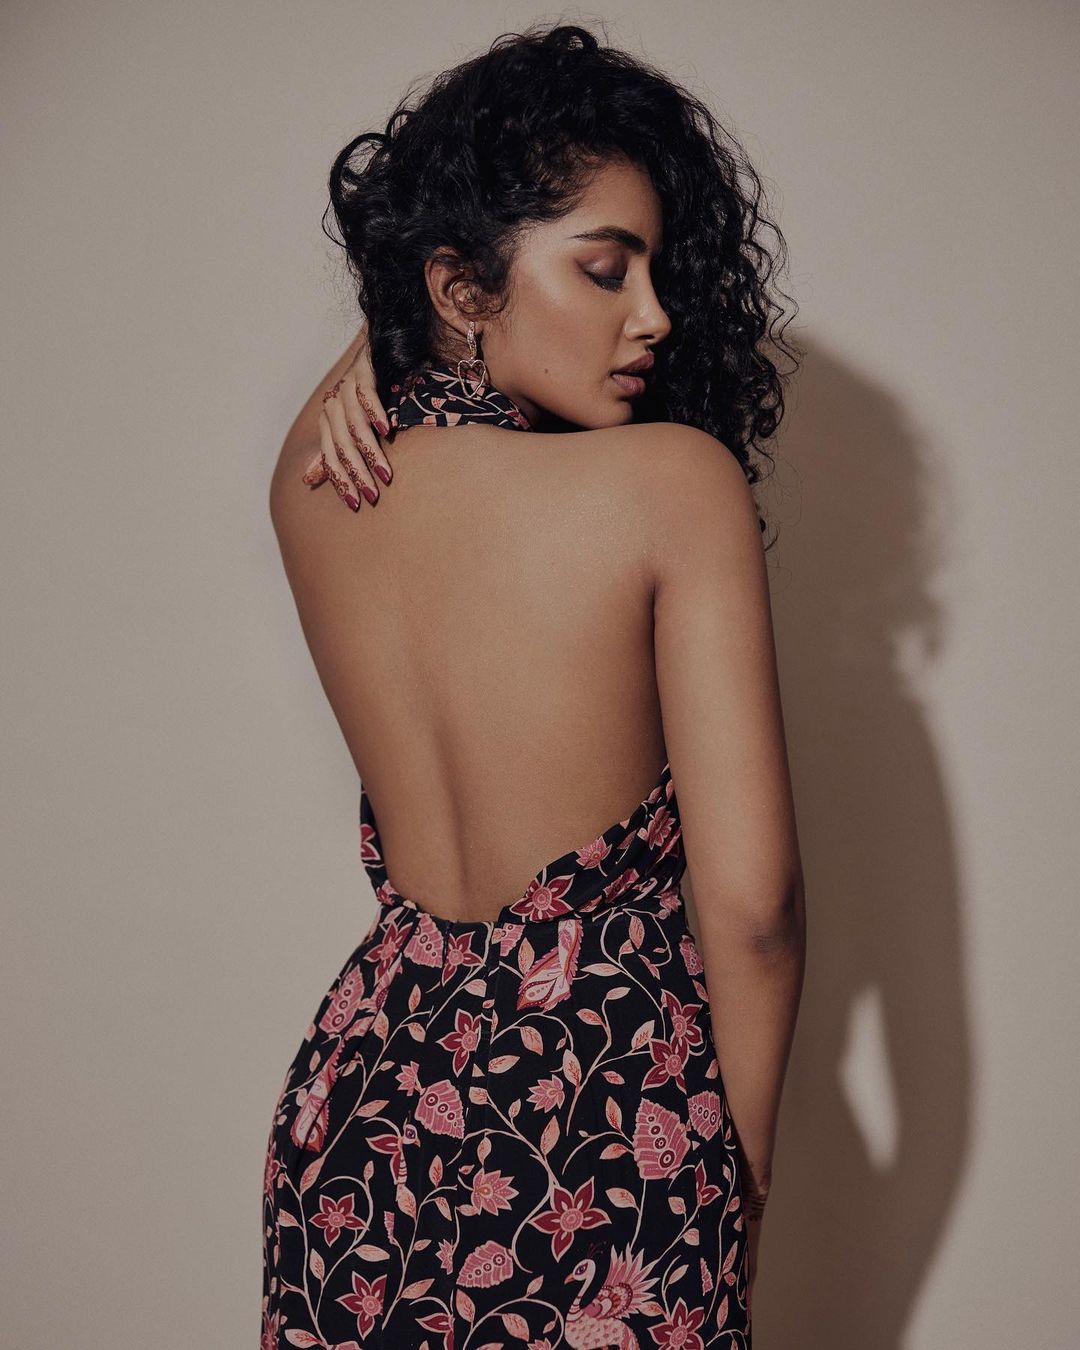 Anupama Parameswaran Flaunts Her Sexy Back In This High Slit Dress See Now